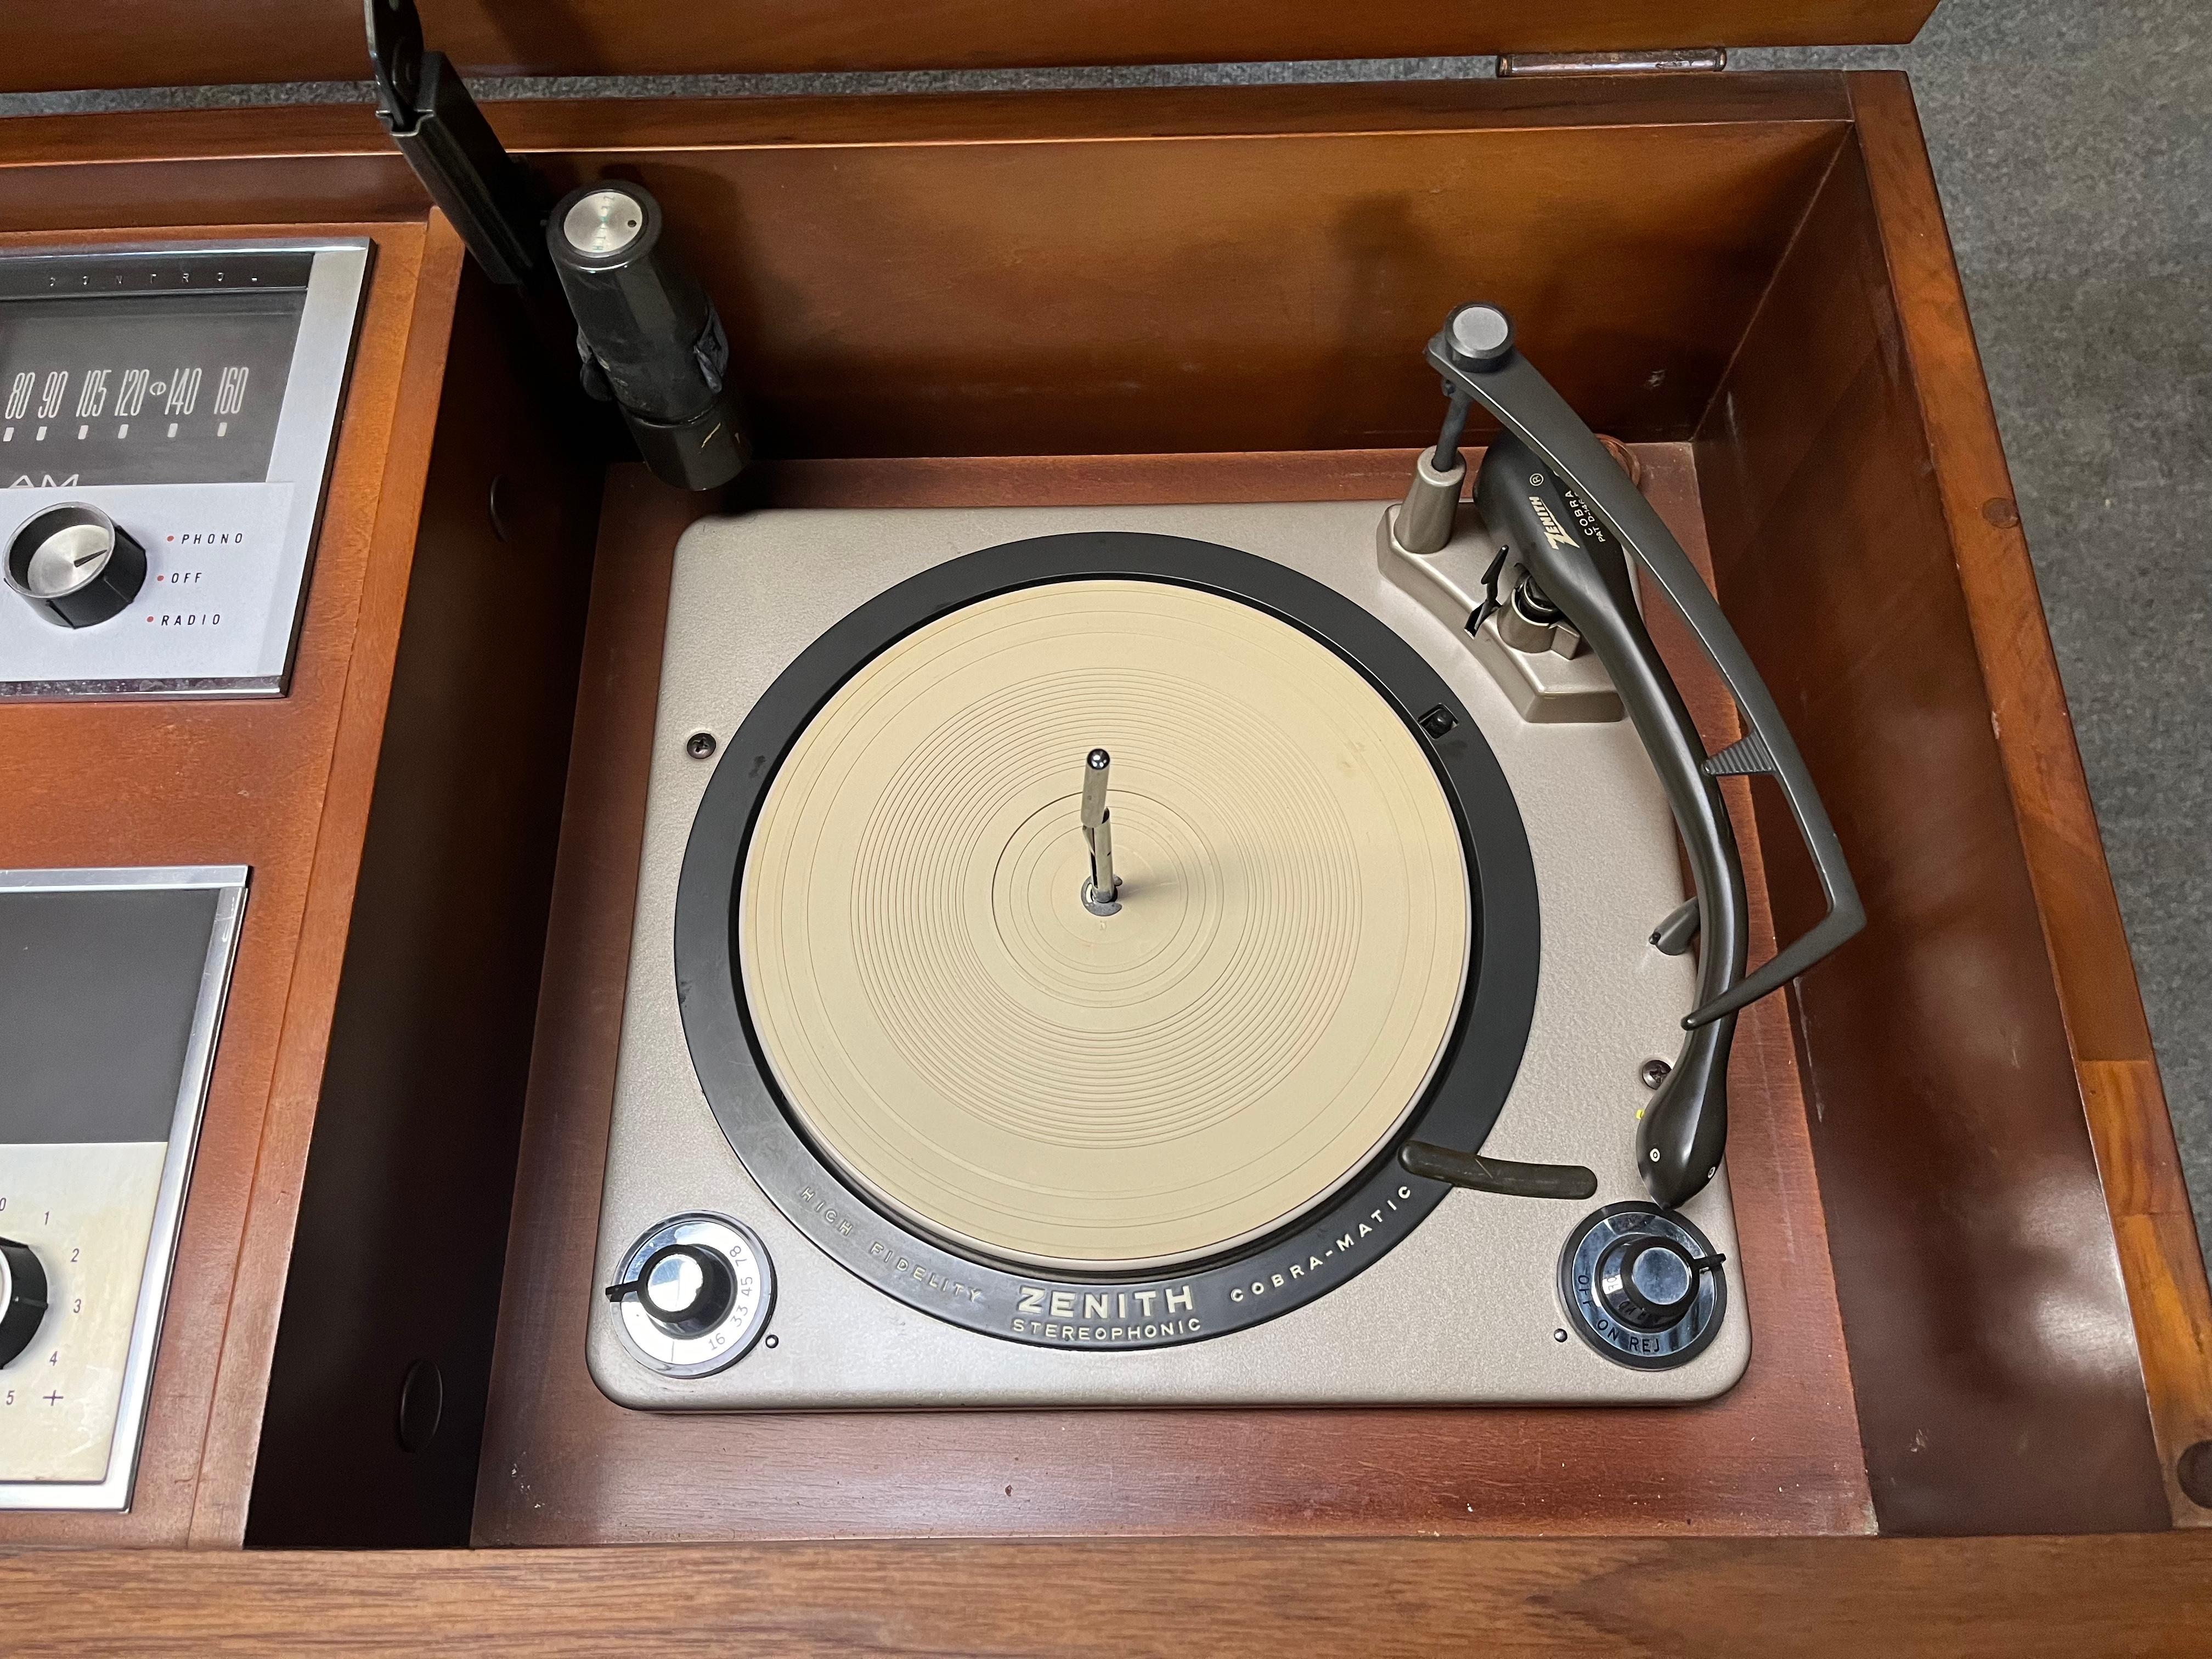 1970's record player console